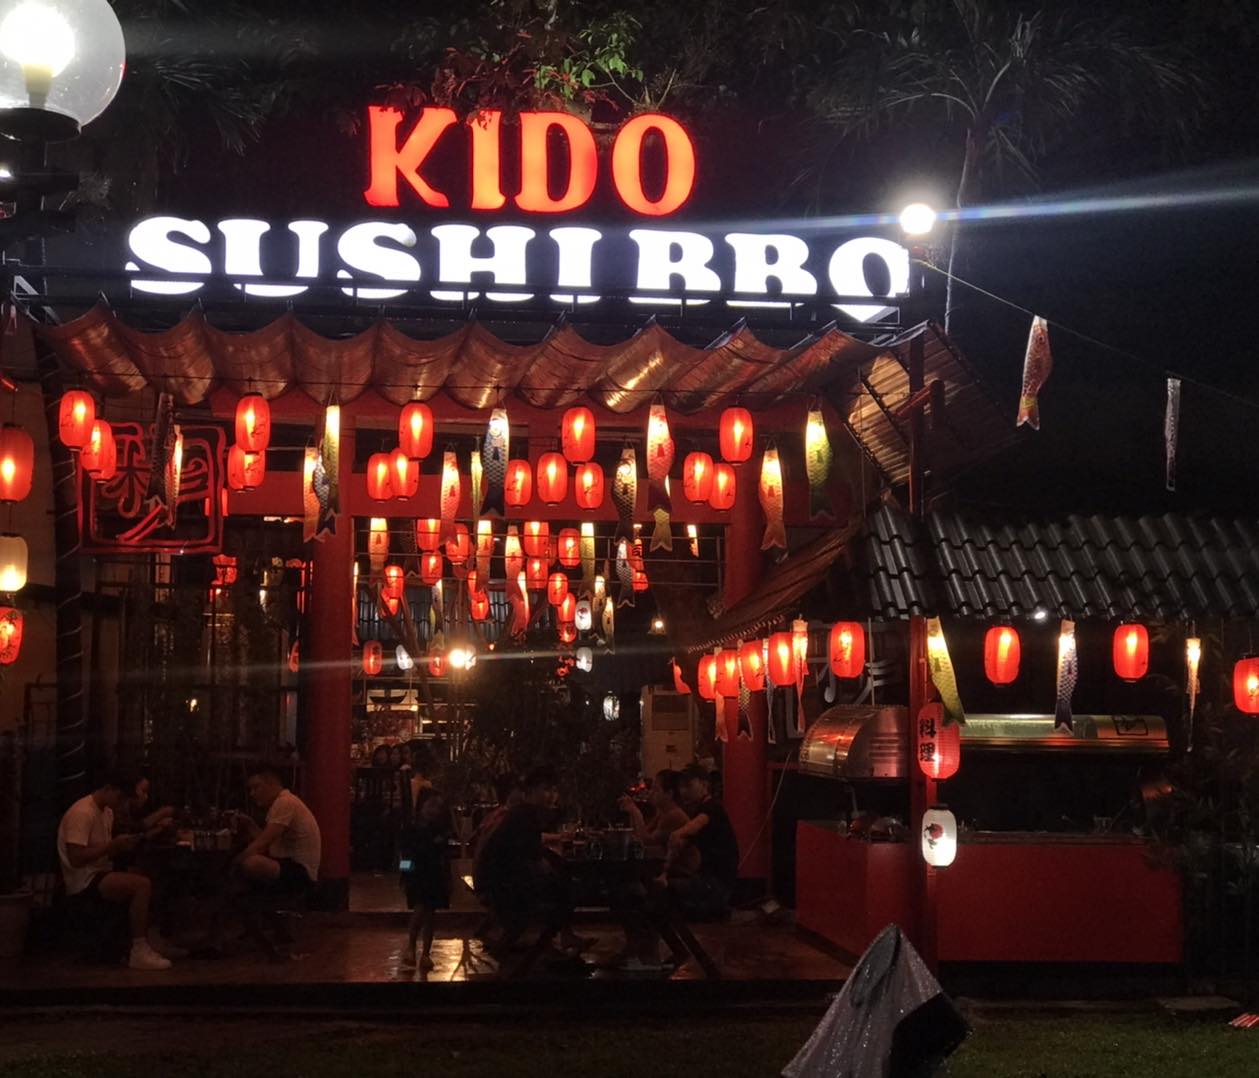 Kido Sushi Hue